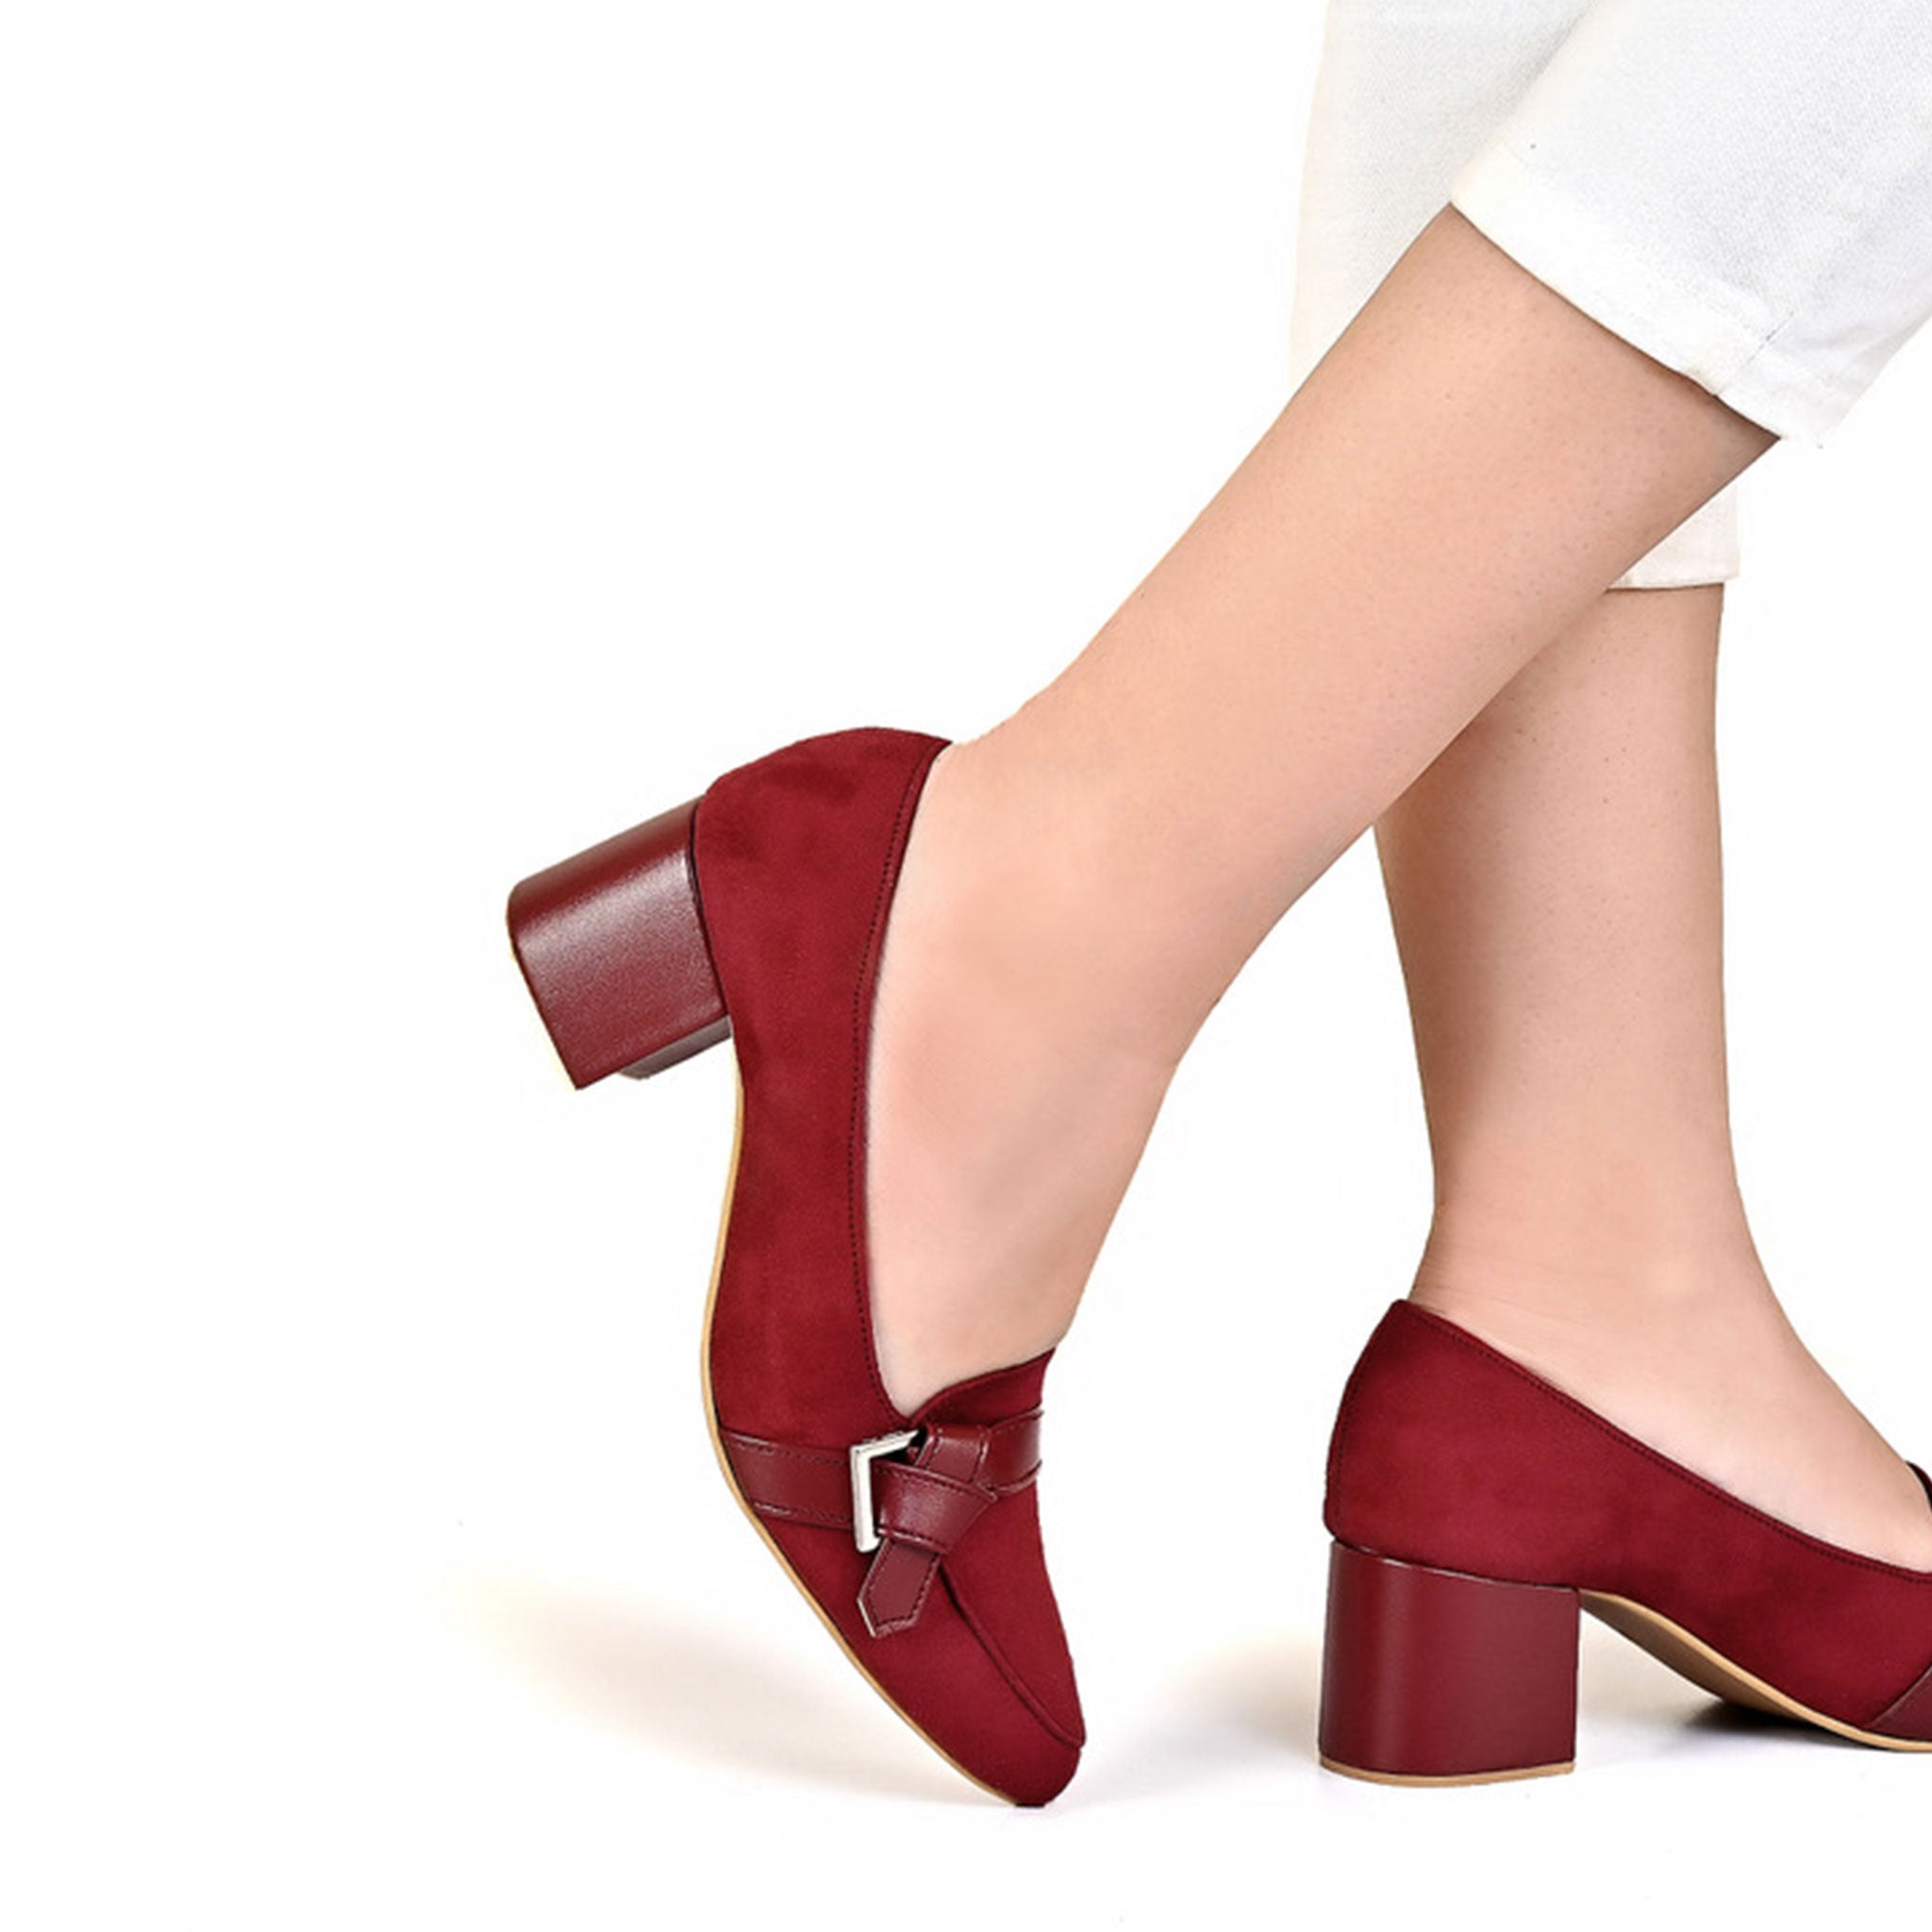 Maroon heels | Heels, Pointed toe heels, Maroon